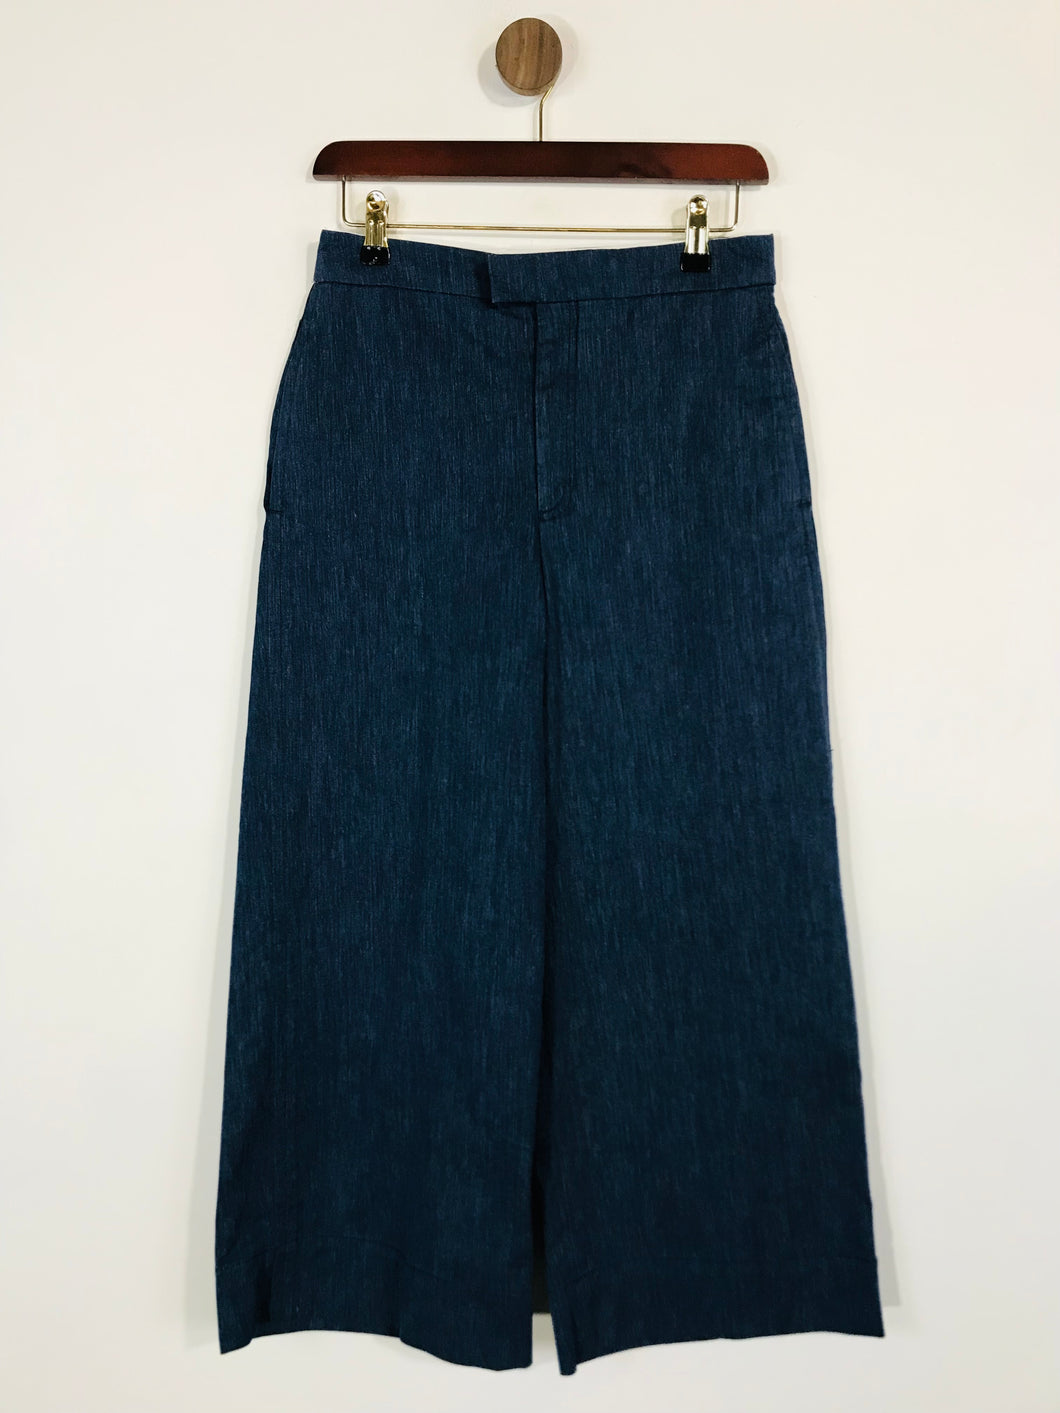 Zara Women's Denim Look Culottes Trousers | XS UK6-8 | Blue